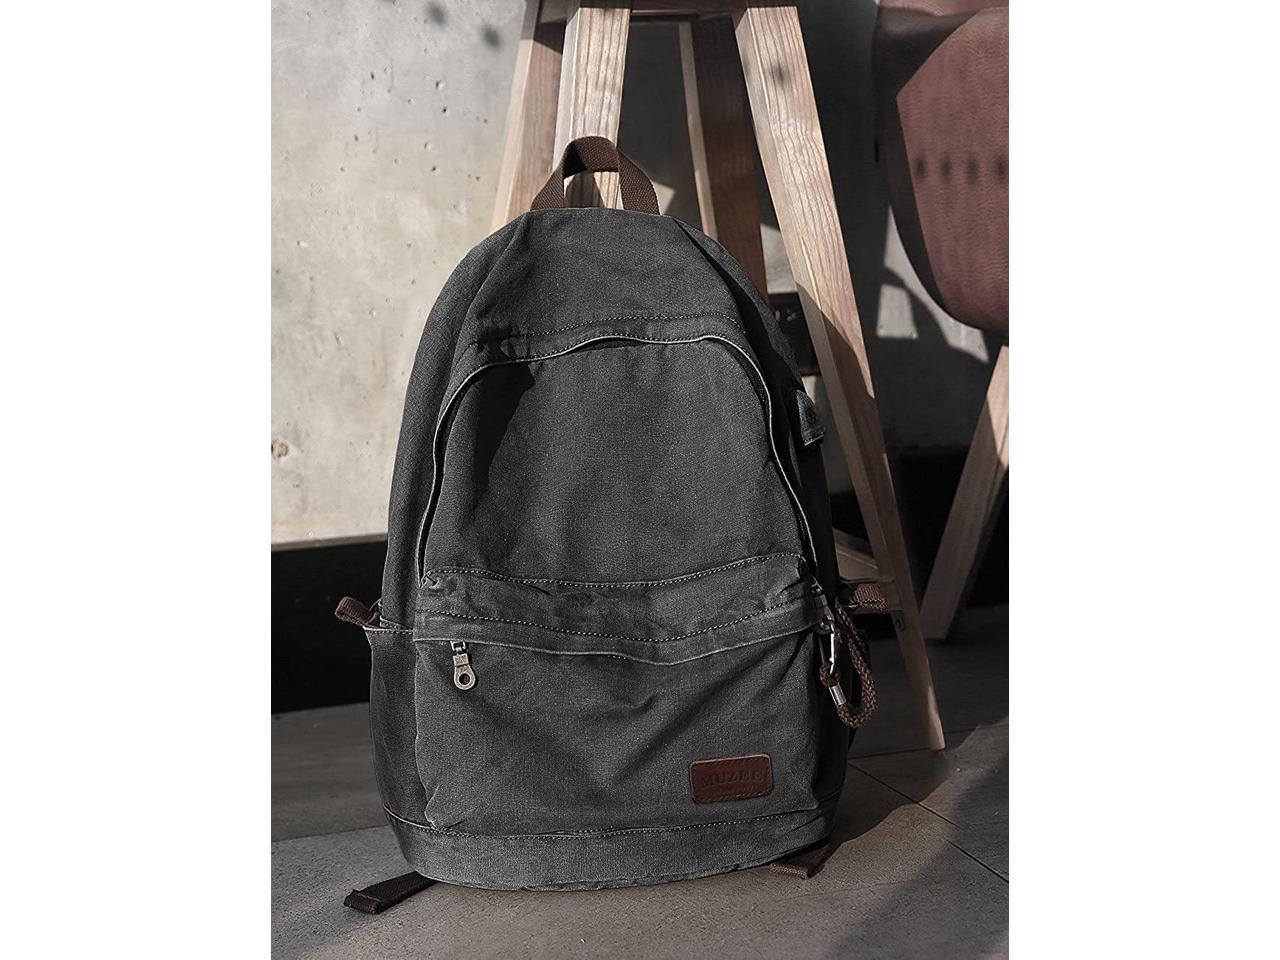 MUZEE Canvas Backpack Lightweight Travel Daypack Student Rucksack Laptop Backpack 